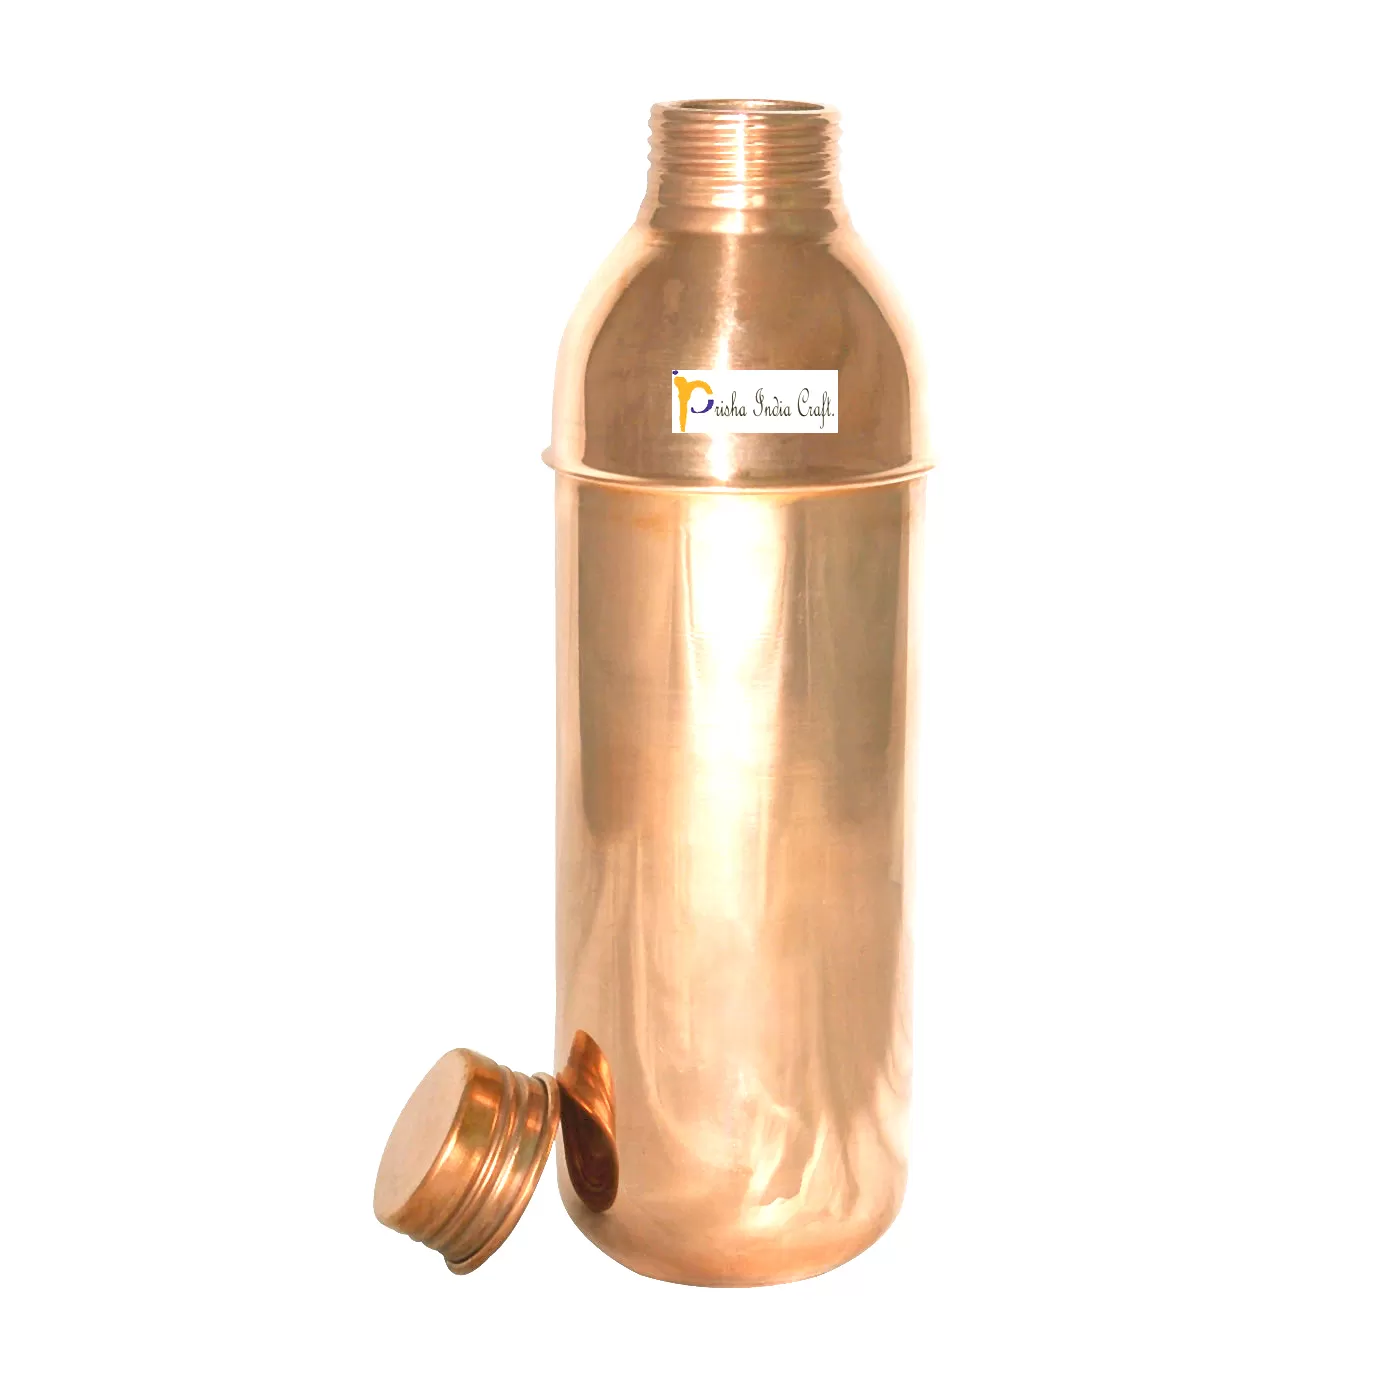 Copper New Bislery Stylish Bottle with Ayurvedic benefited, Capacity 800 ML / 27 oz